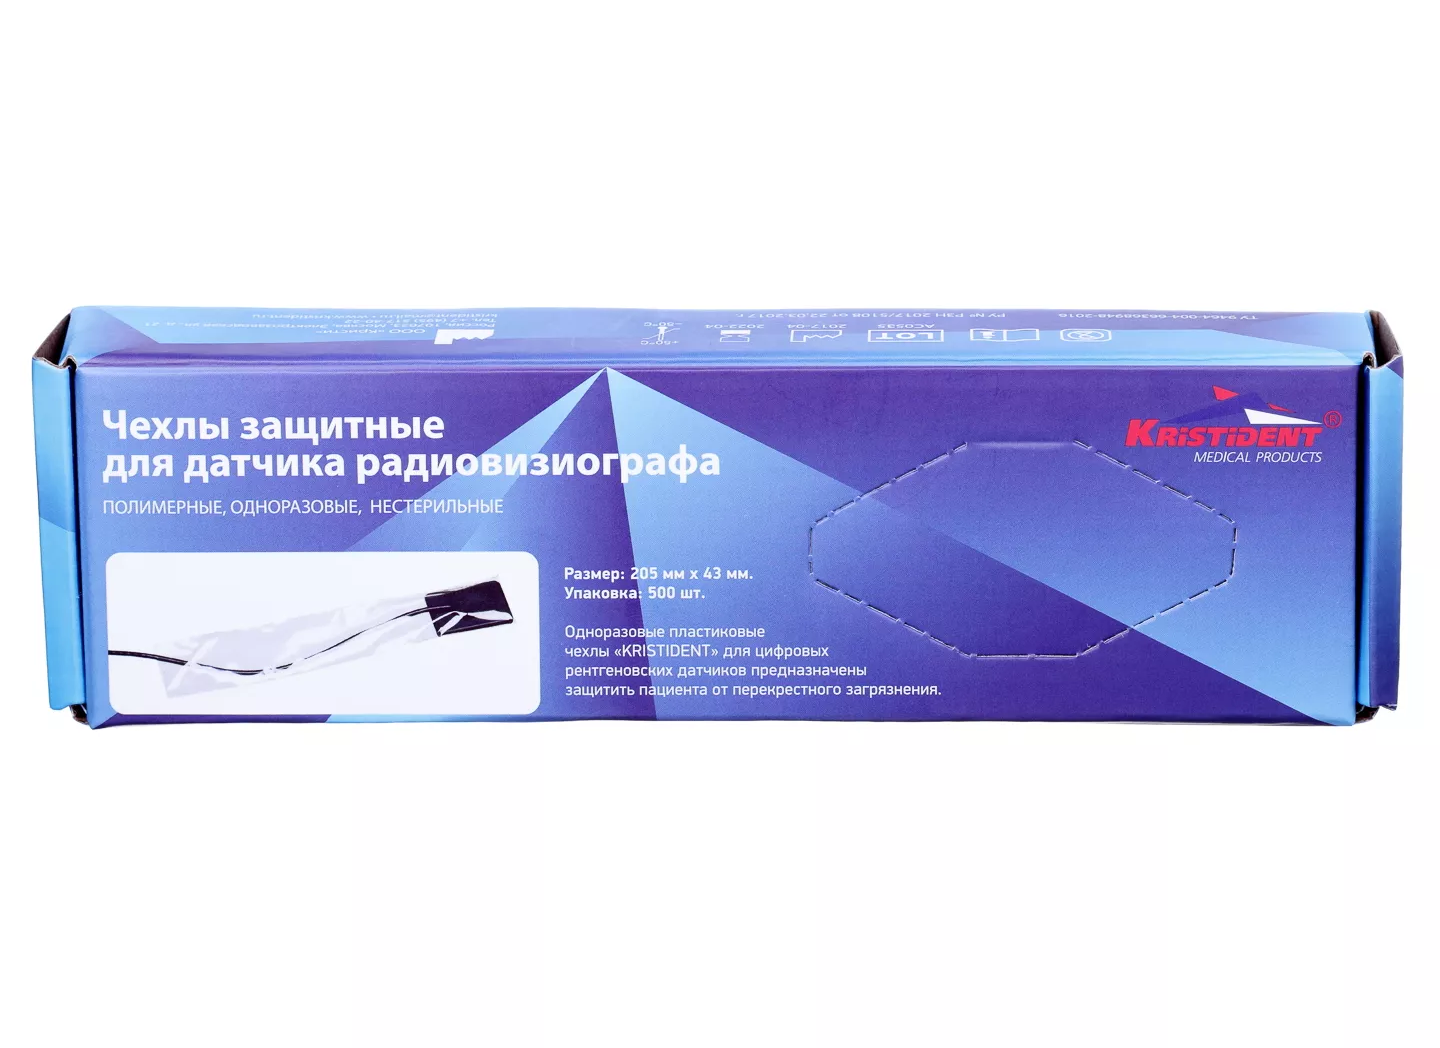 Чехлы КРИСТИДЕНТ для датчика визиографа, размер 205мм*43 мм, упаковка 500 шт.